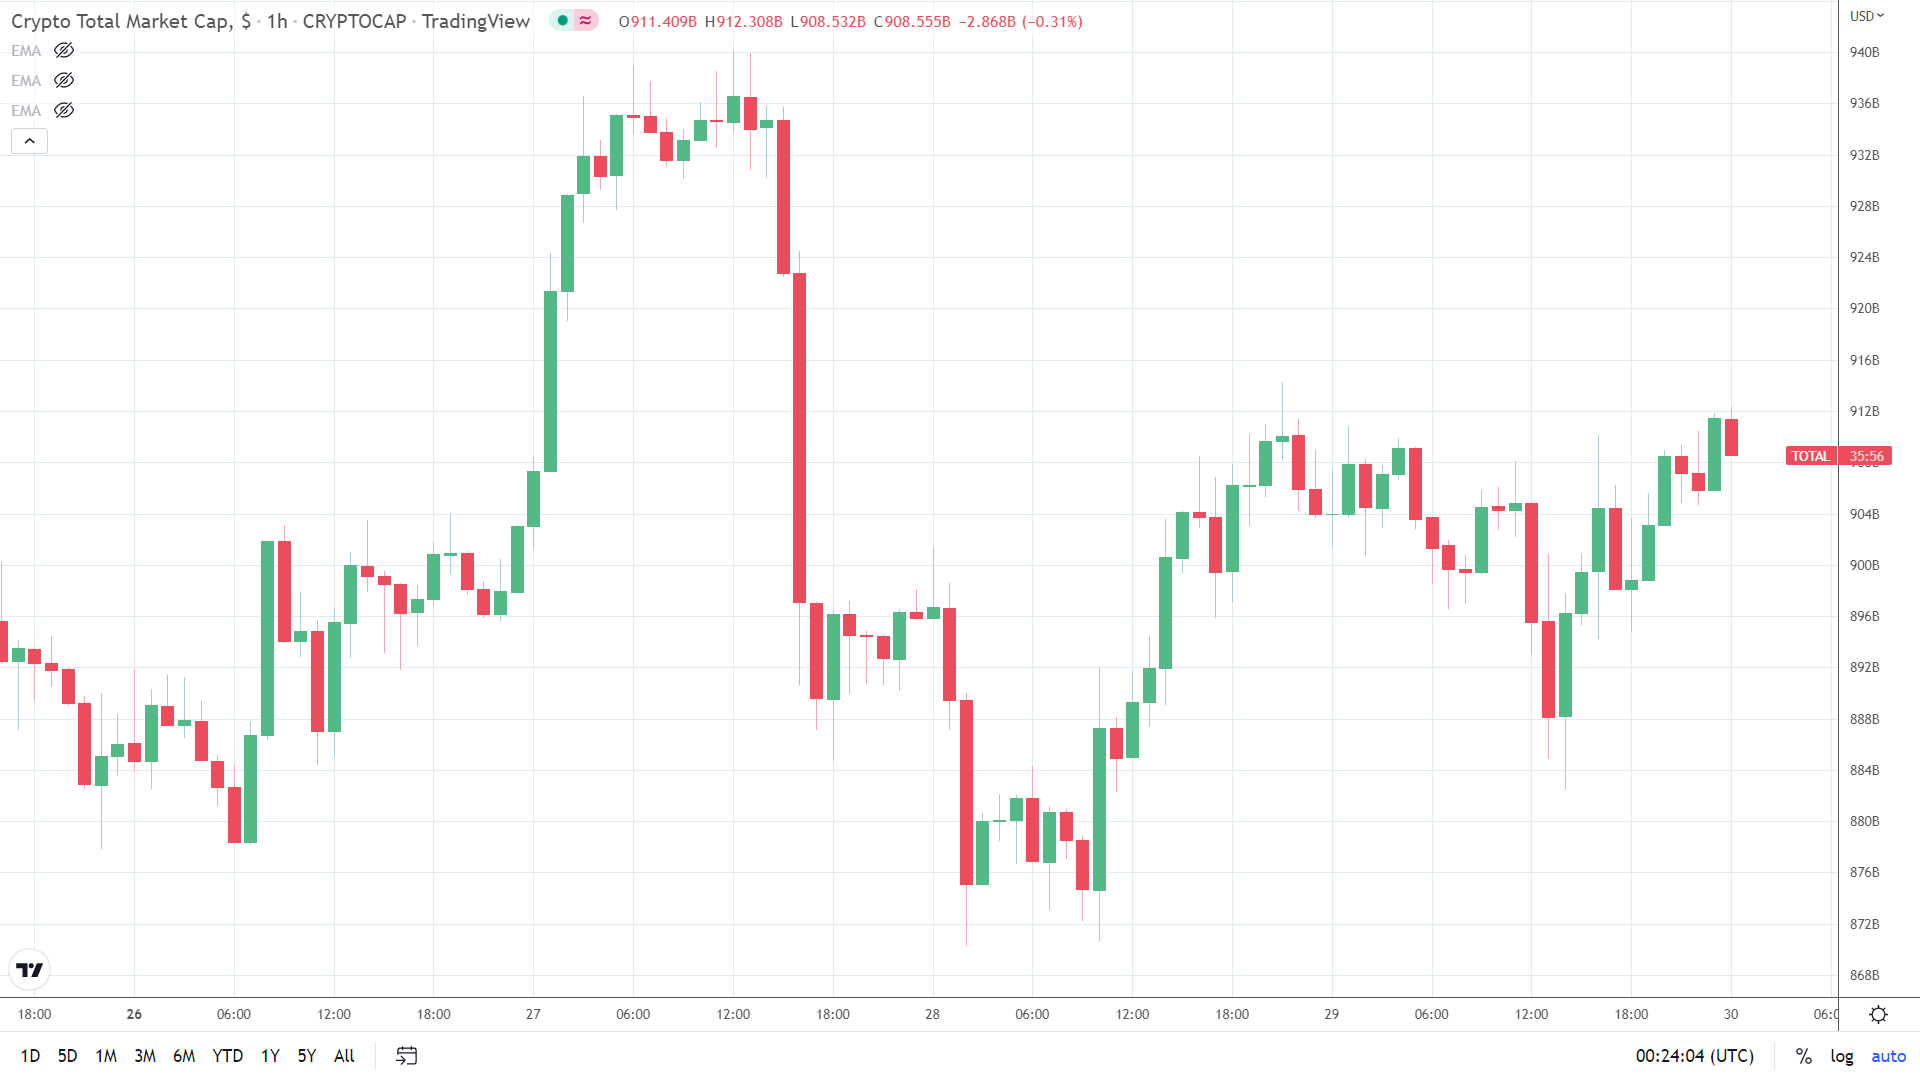 Crypto market sees a choppy Thursday session.